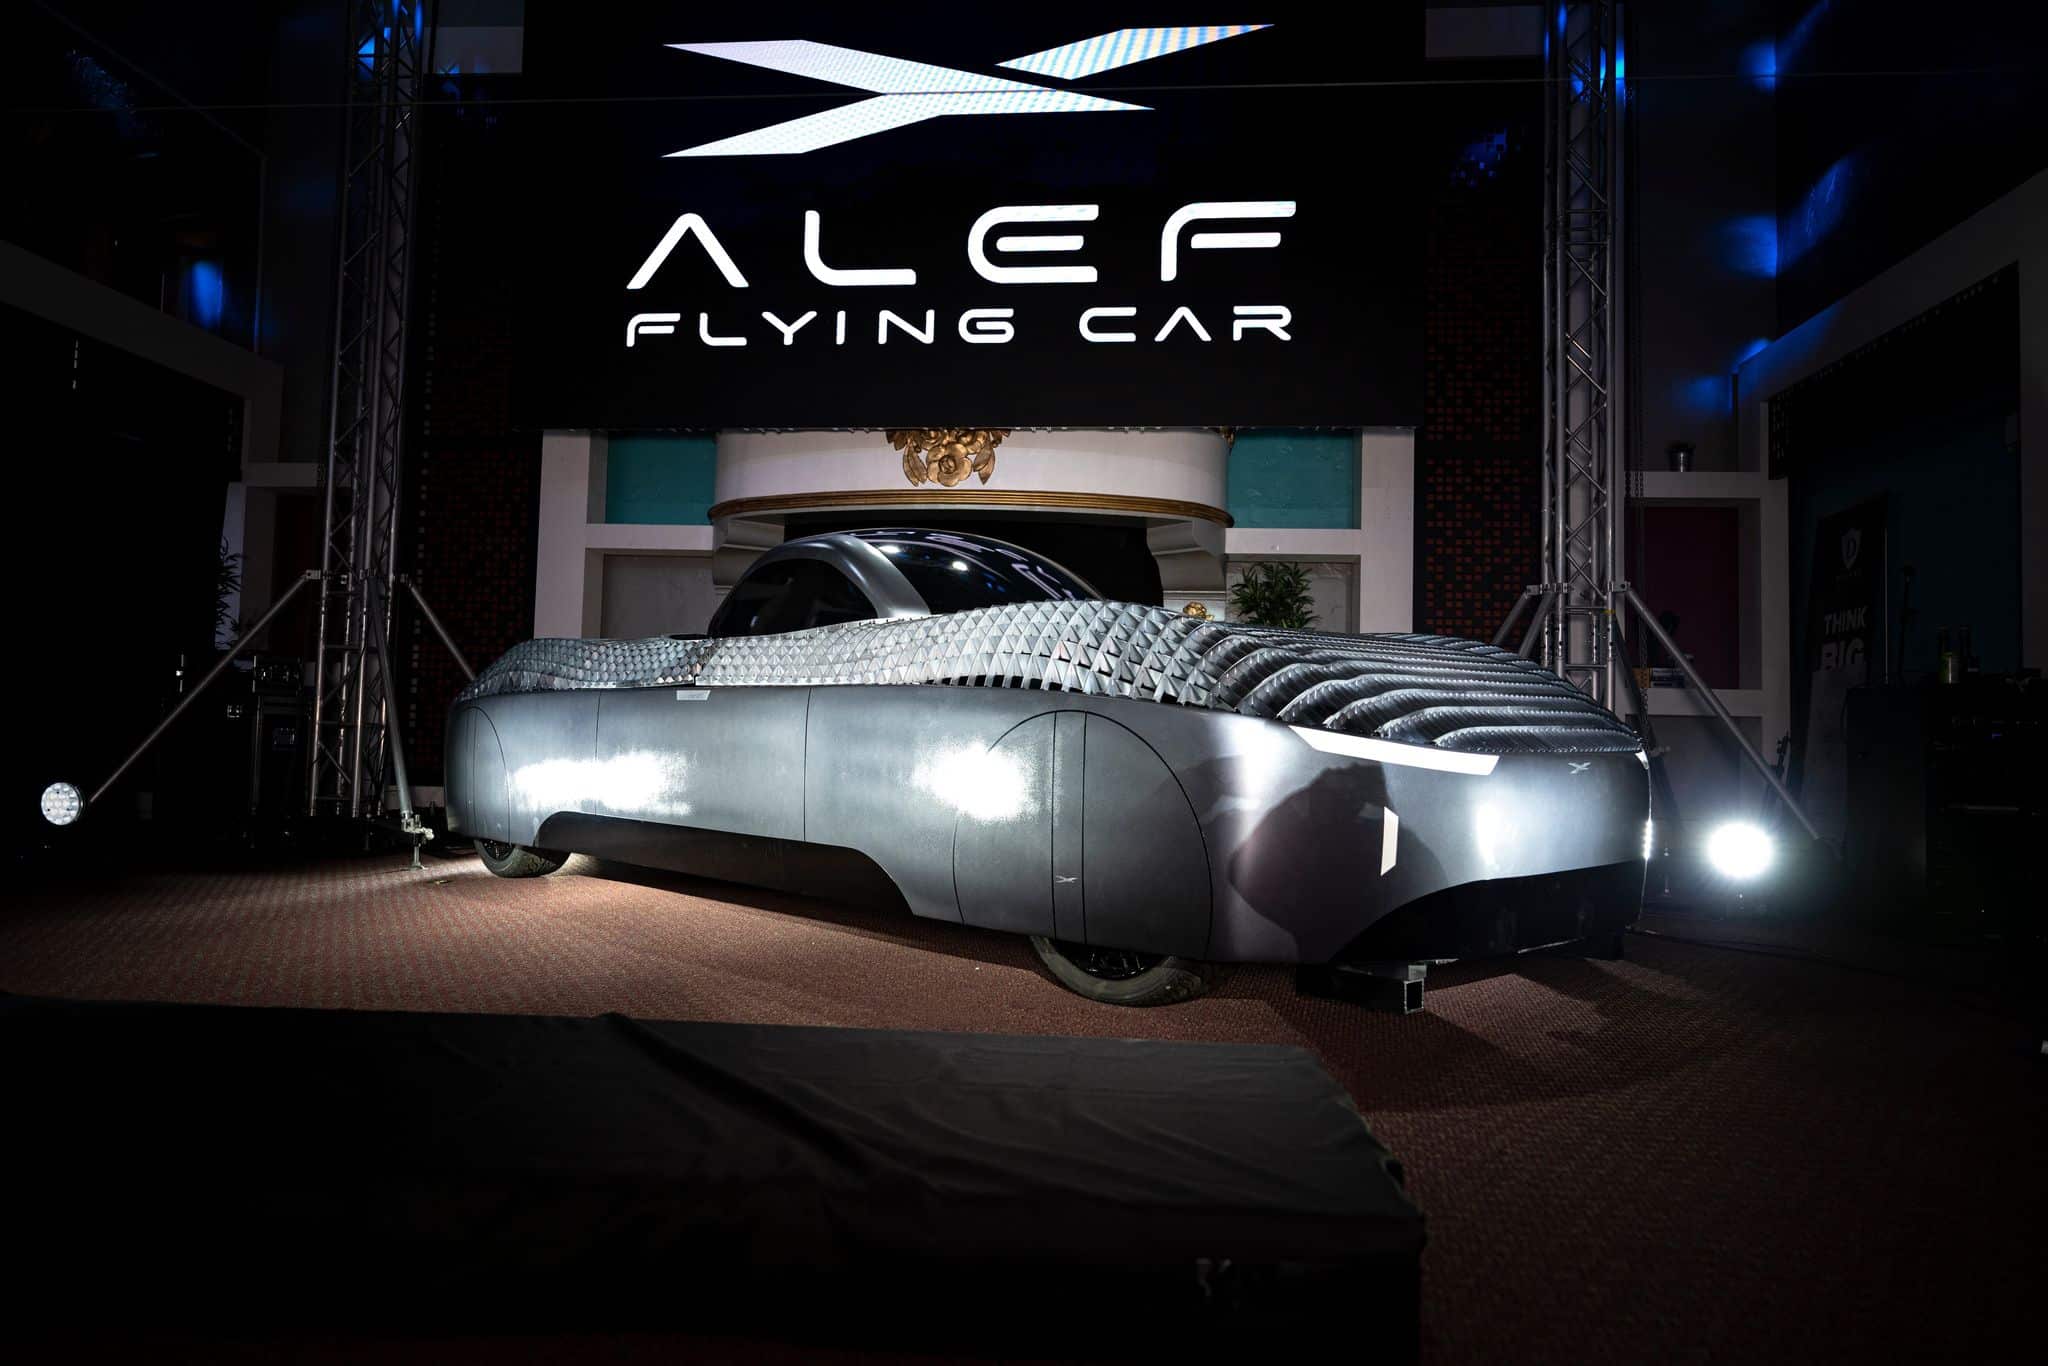 Alef flying car. Image credit: Alef Aeronautics